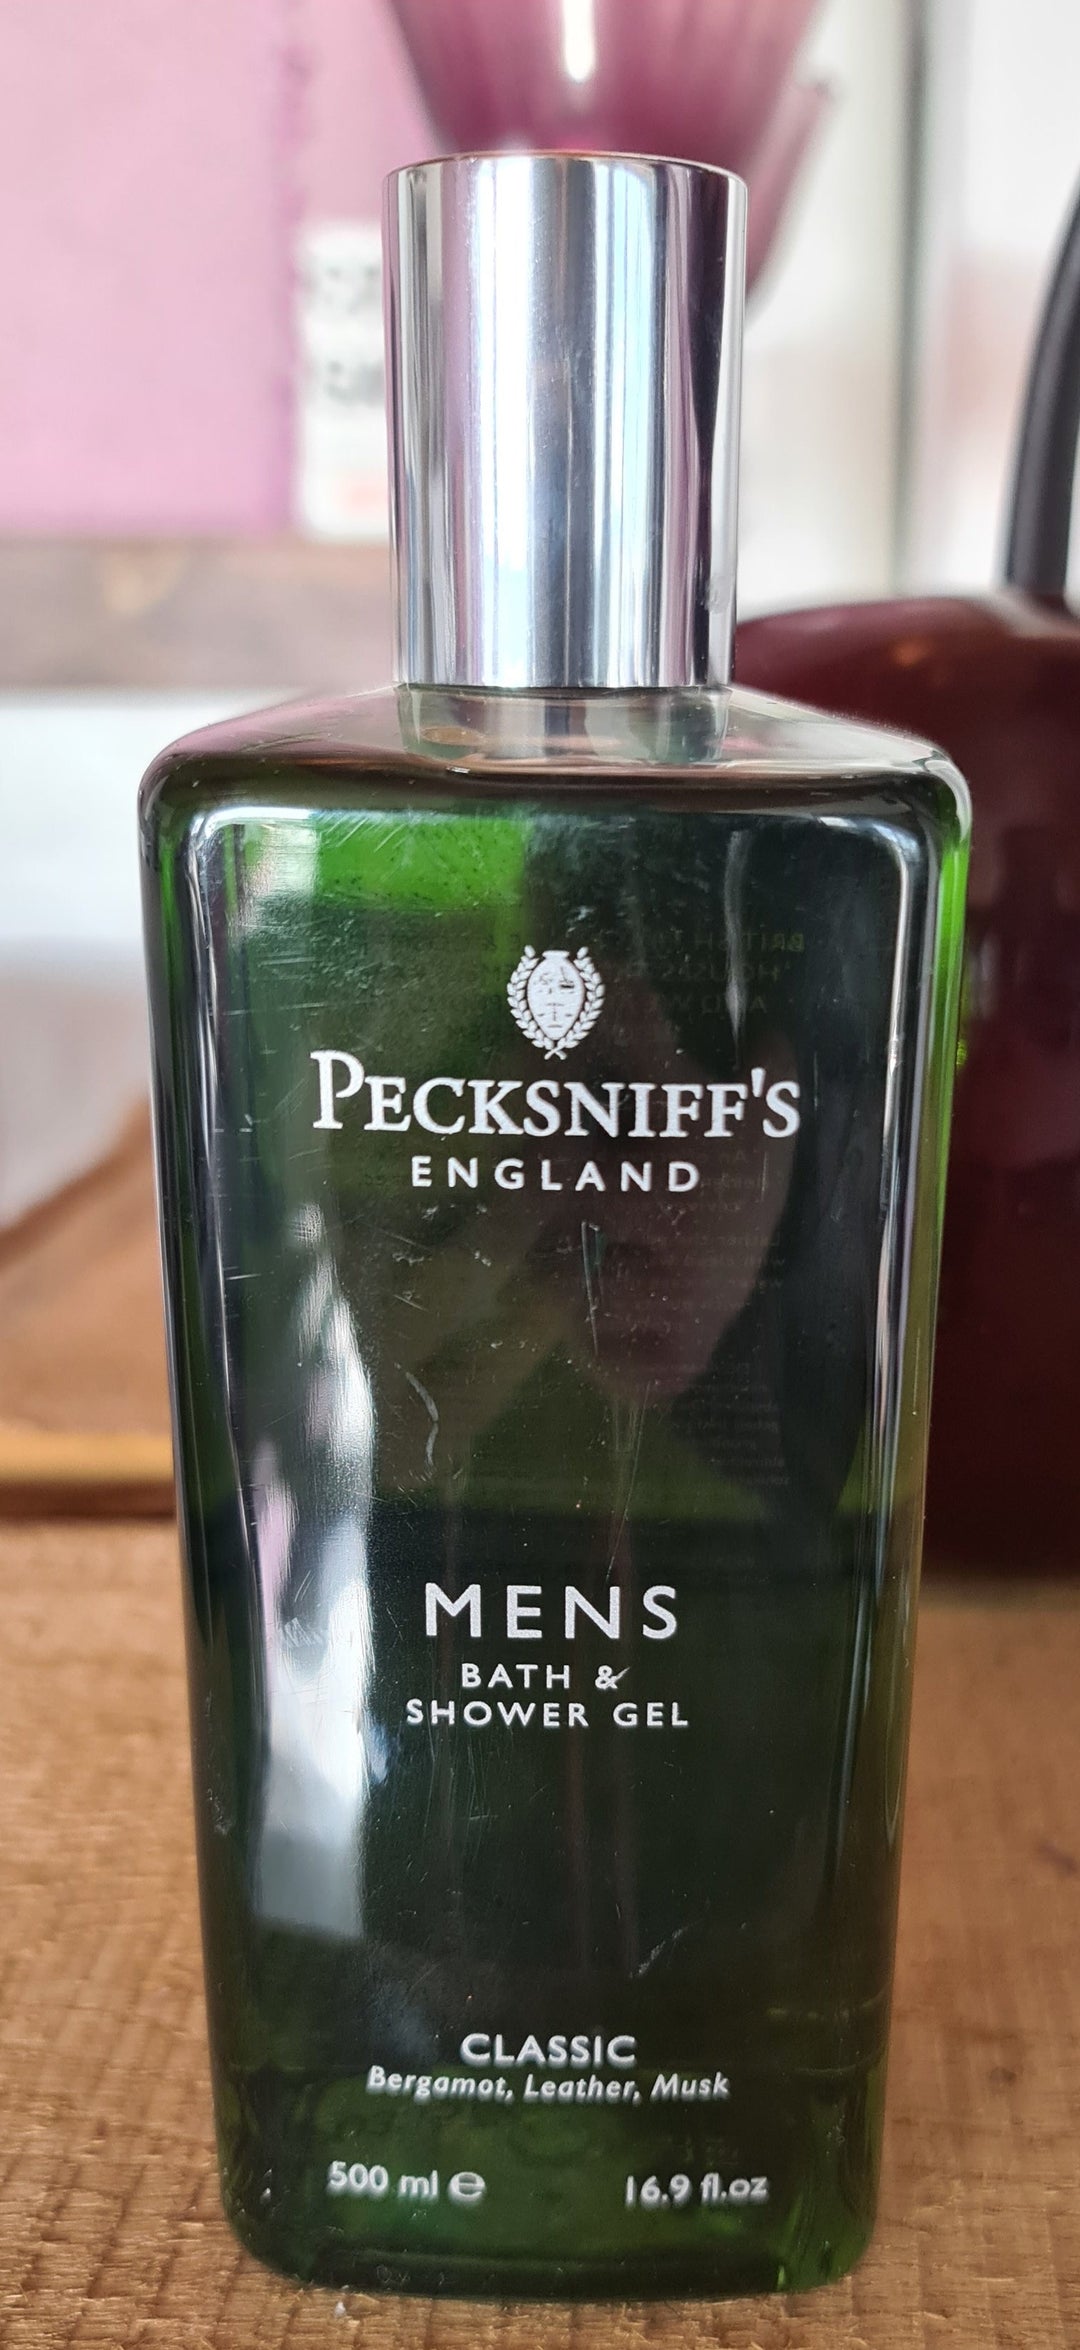 Pecksniff's Men Bath & Shower Gel "Classic", 500 ml - British Moments